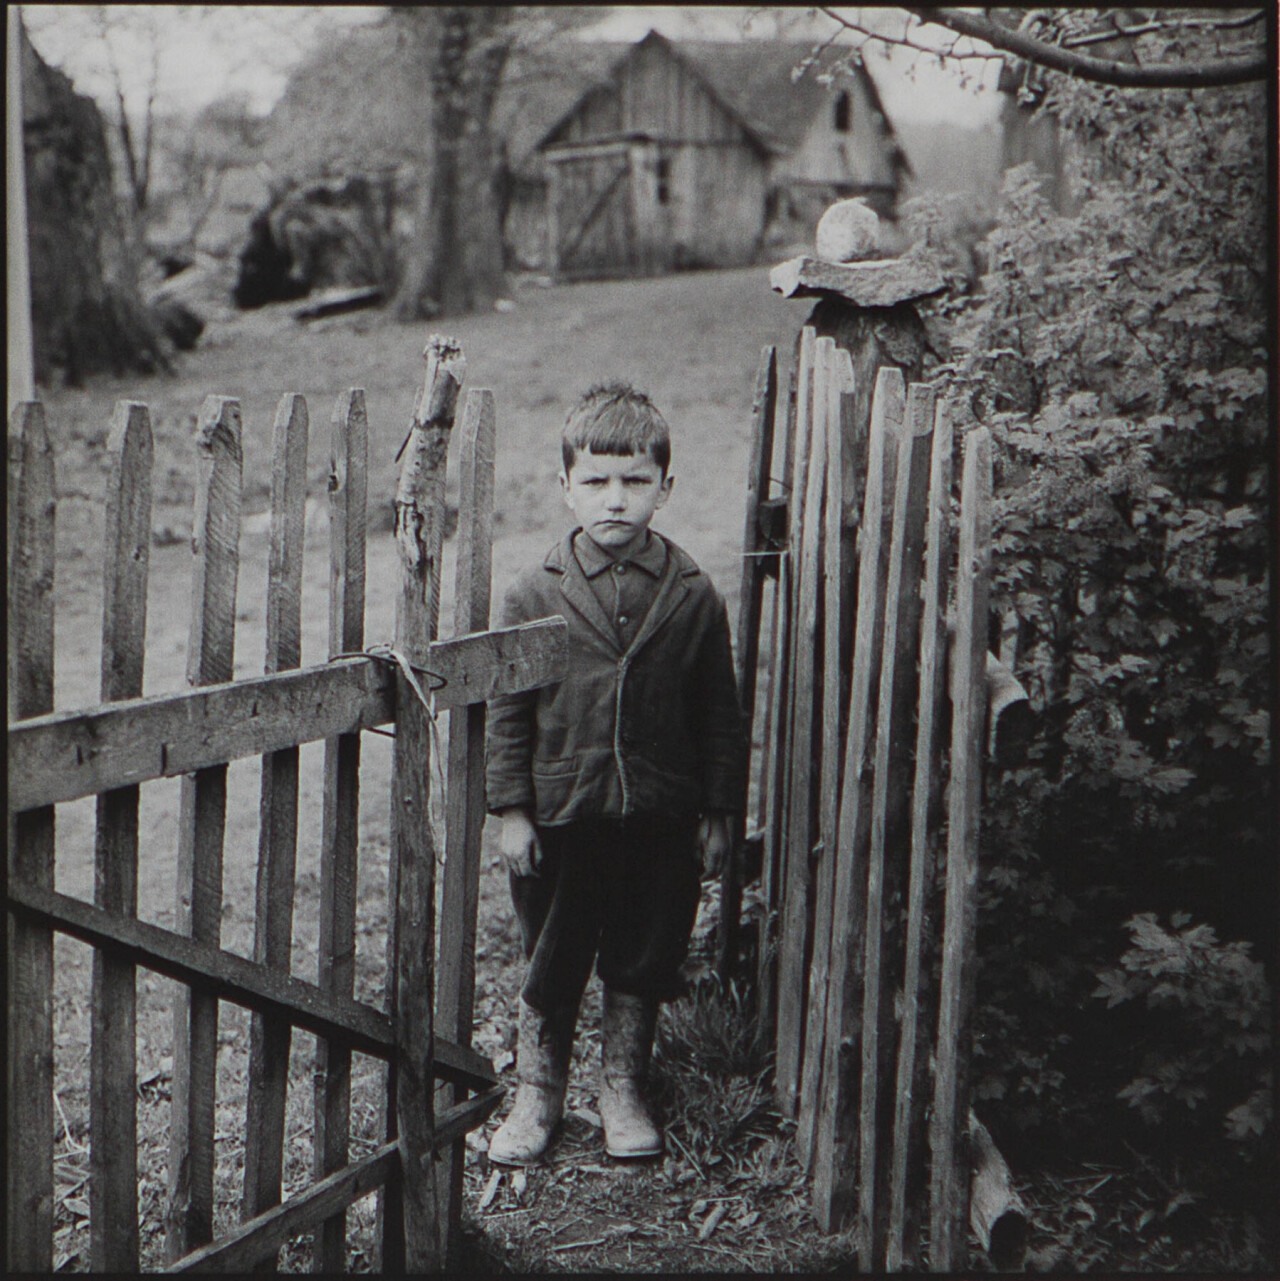 Мальчик у ворот, 1971 год, фотограф Антанас Суткус